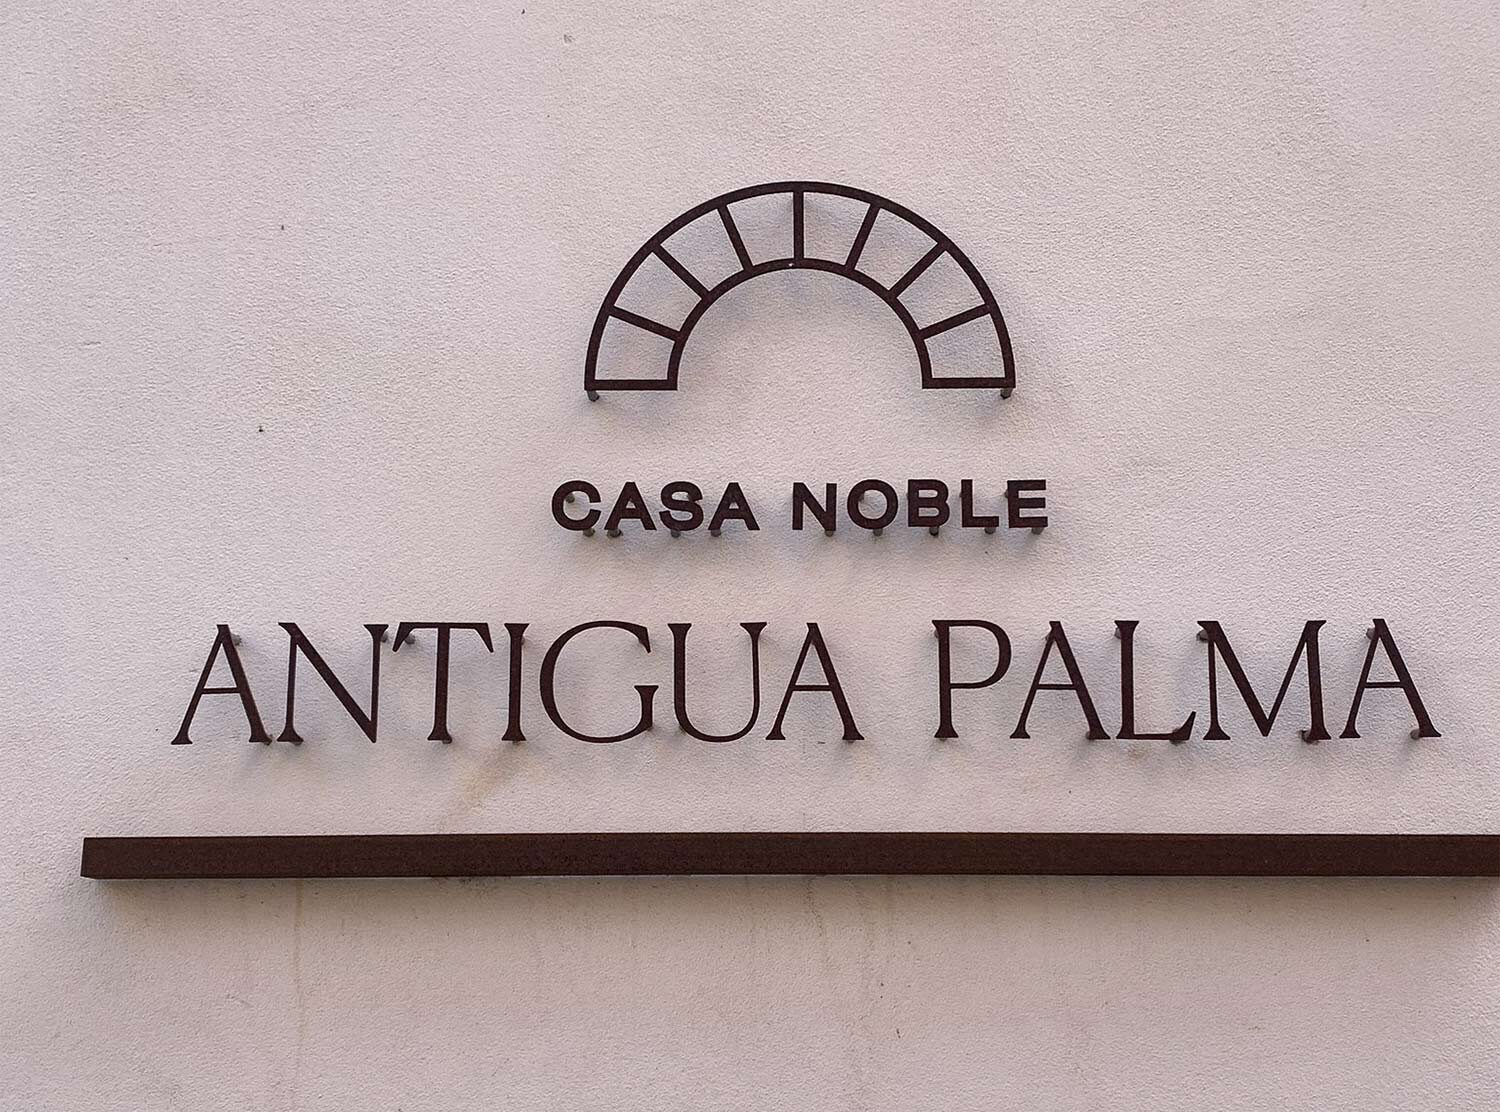 Hotel Antigua Palma We have arrived!